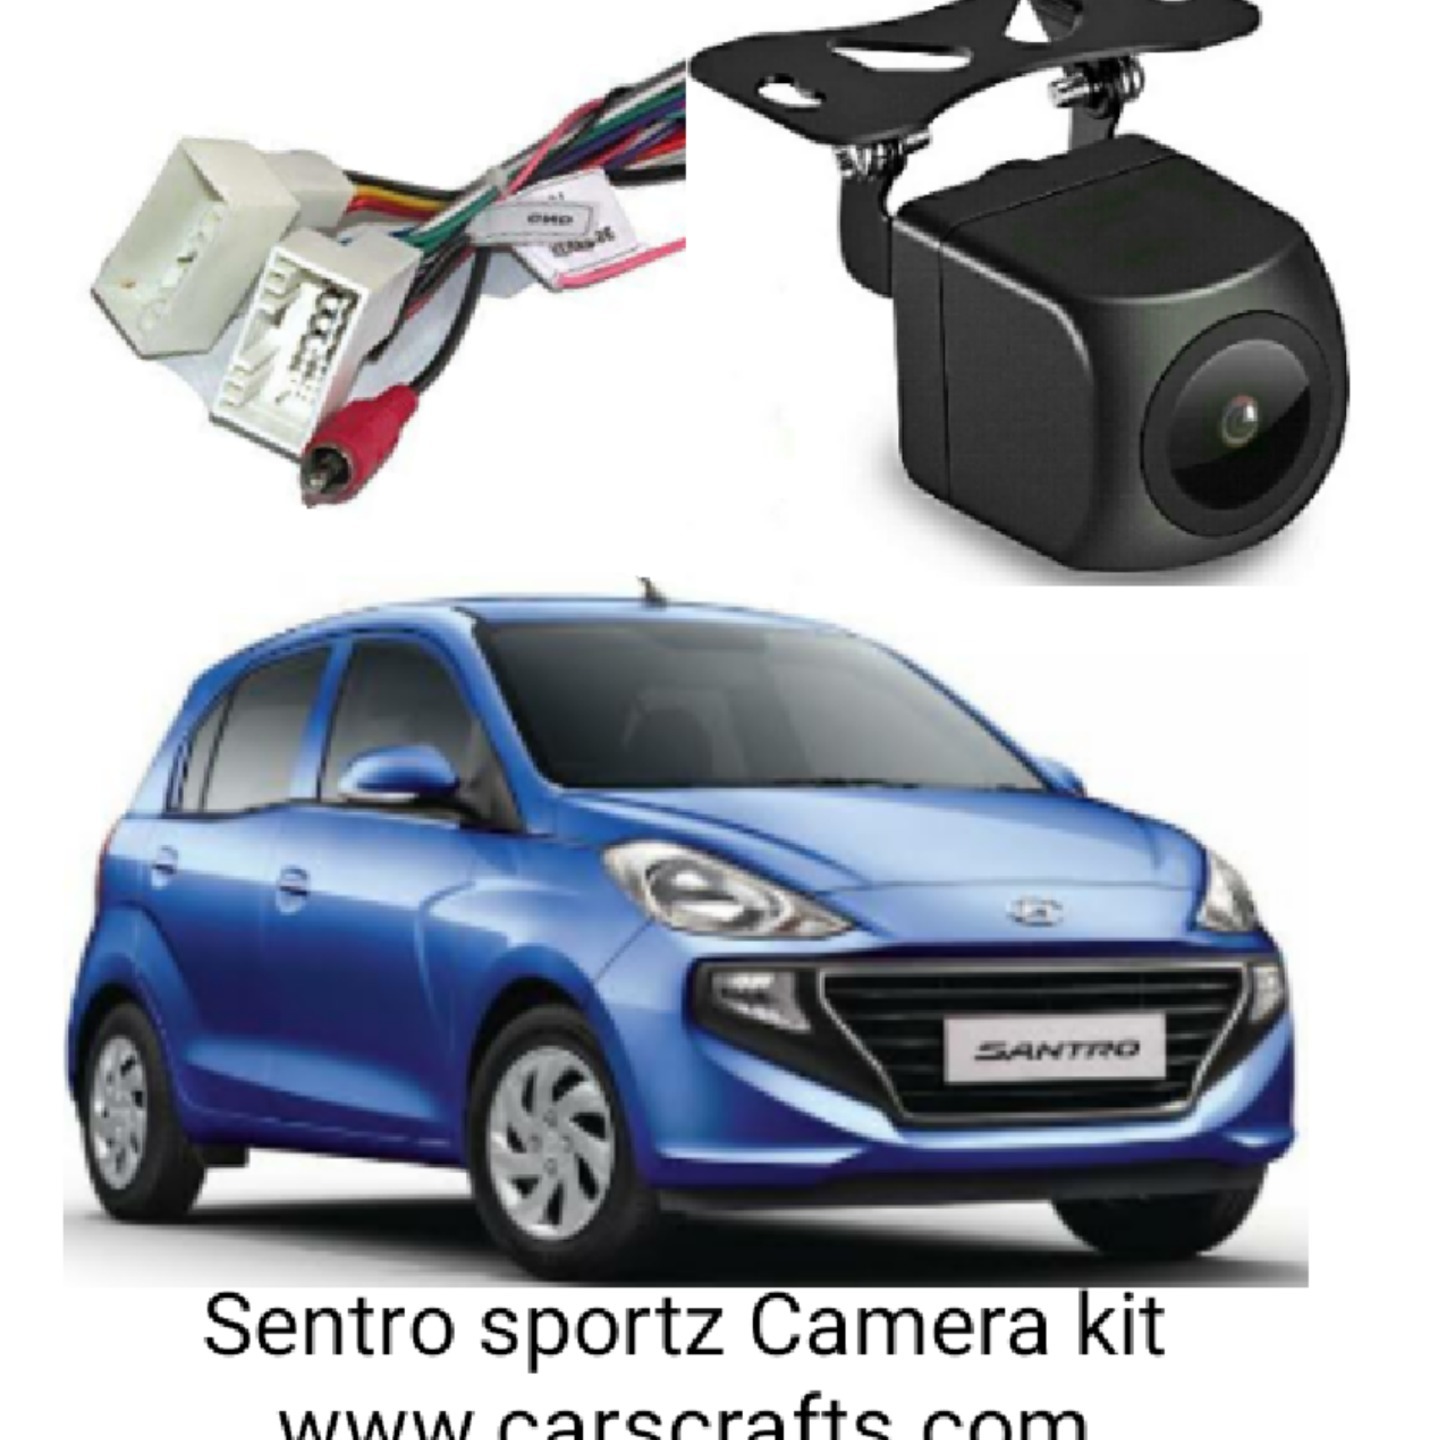 Sentro sportz camera kit